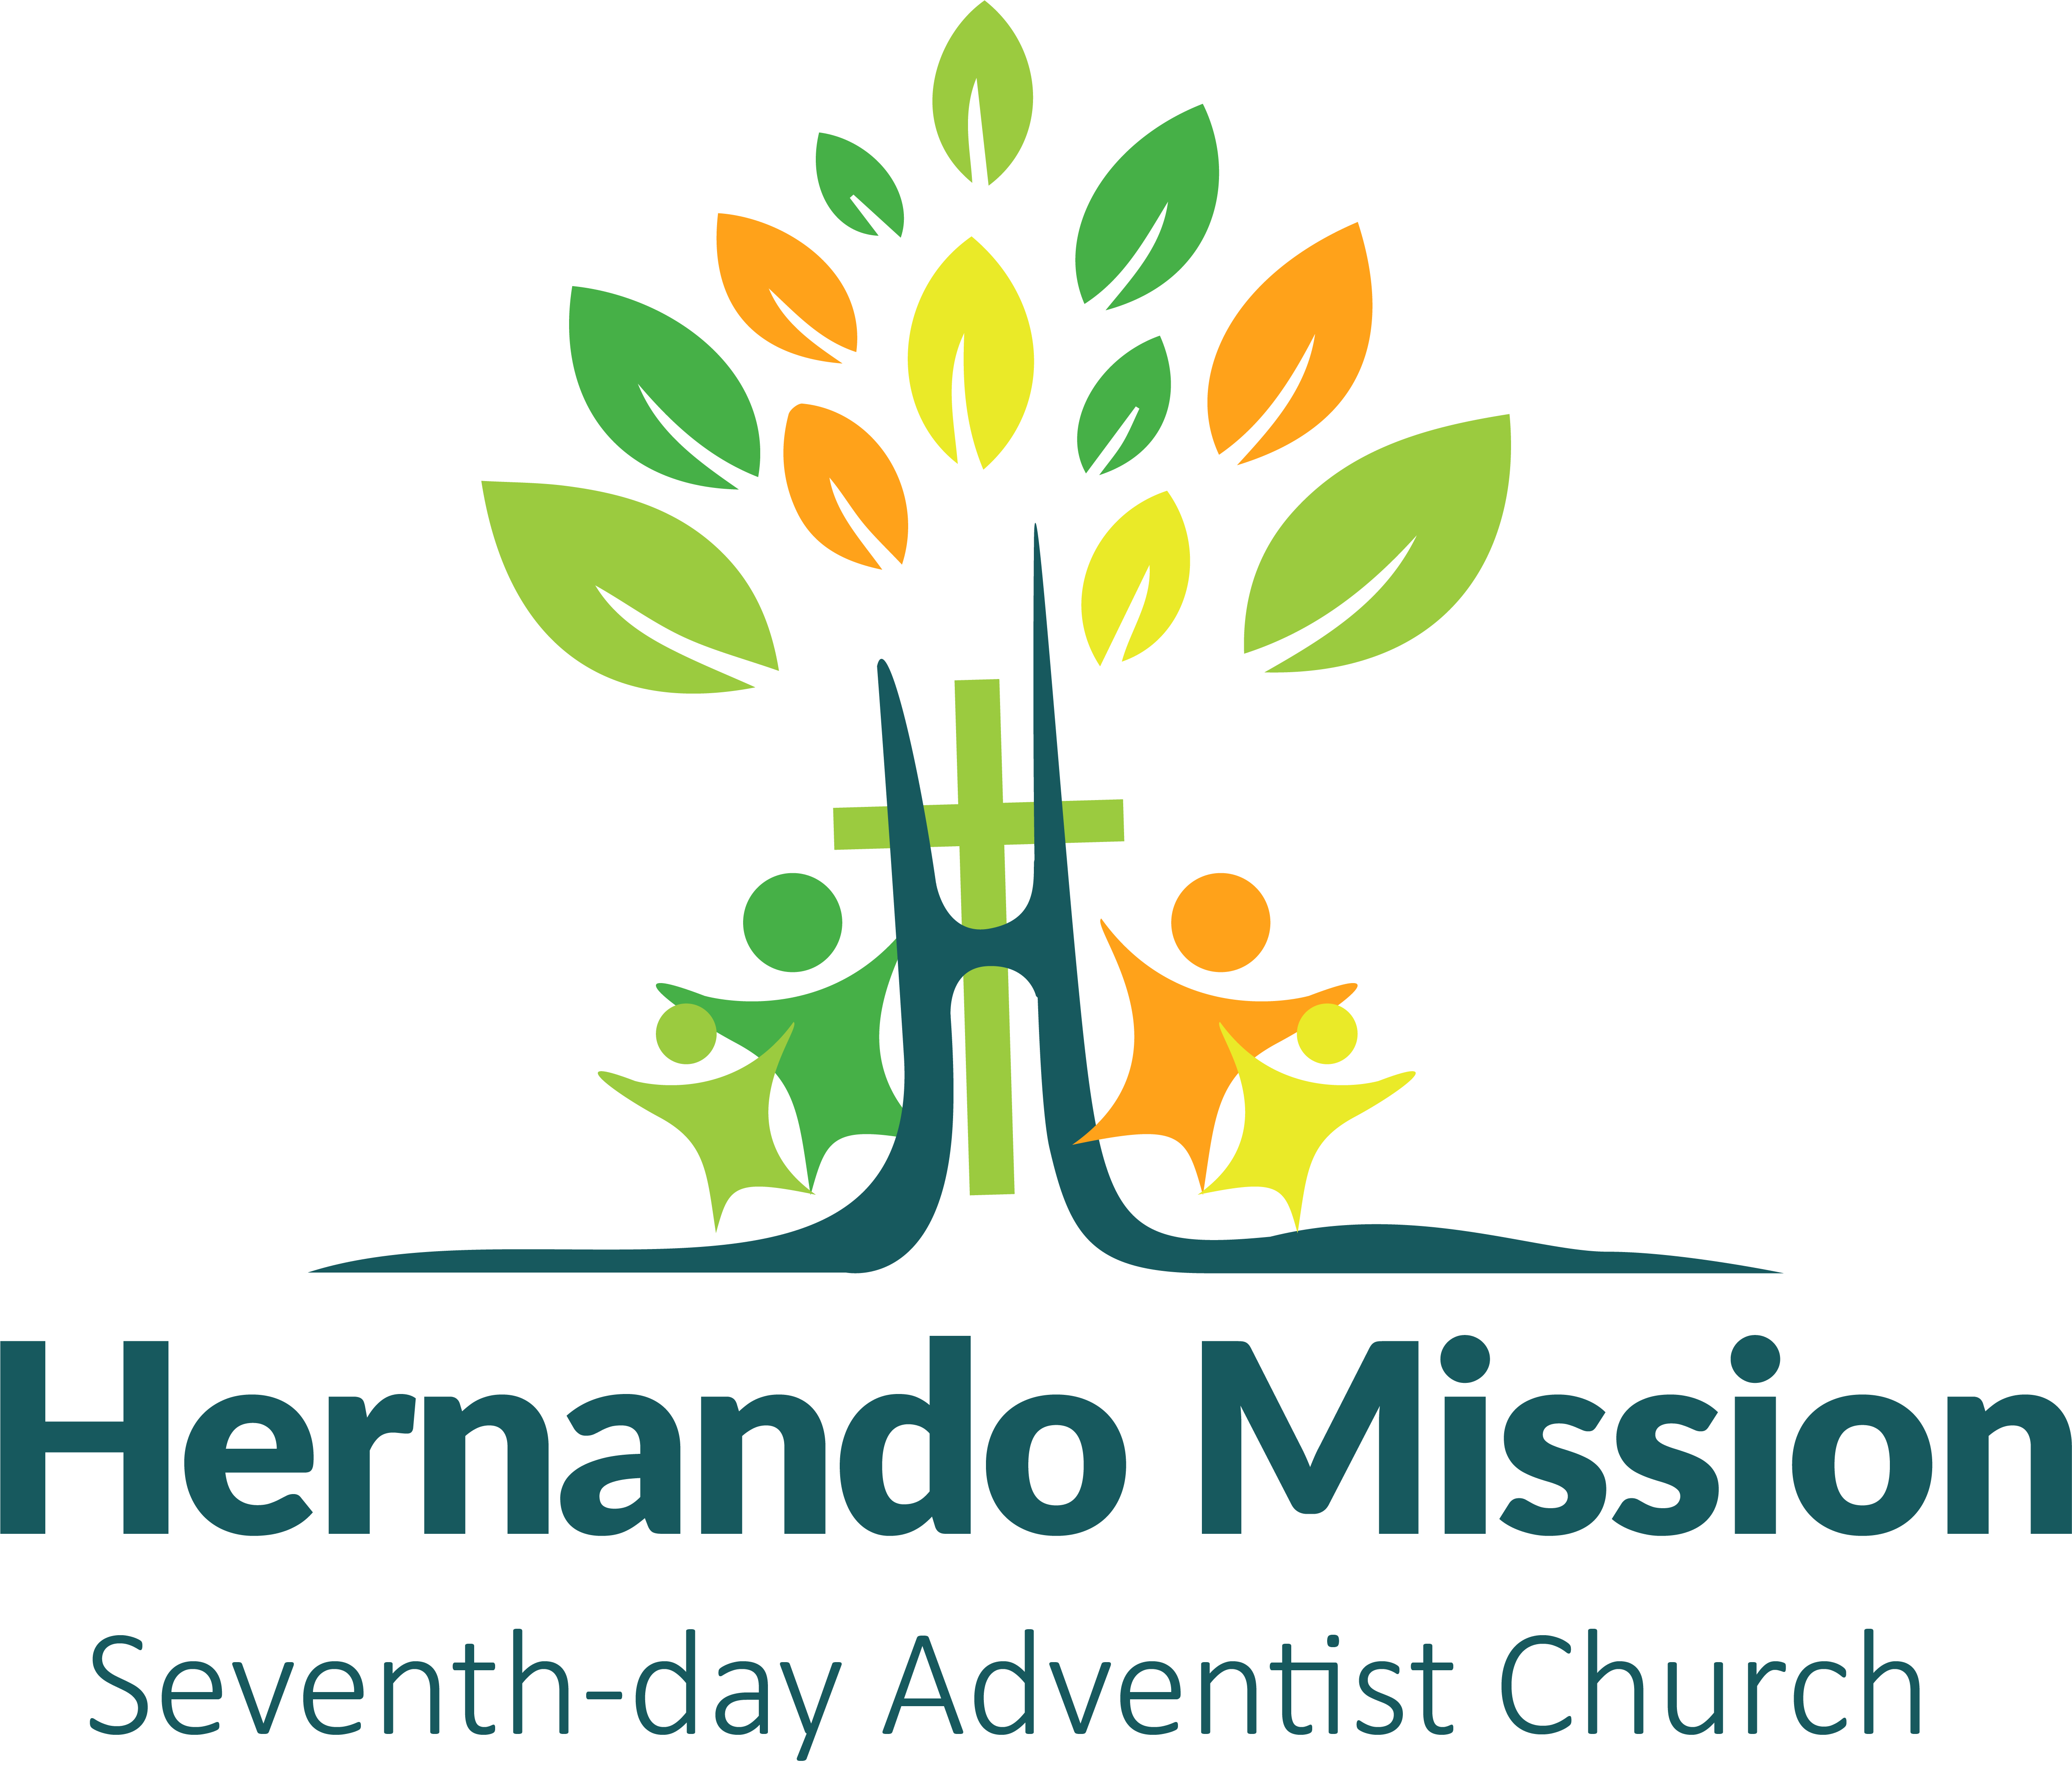 Hernando Mission